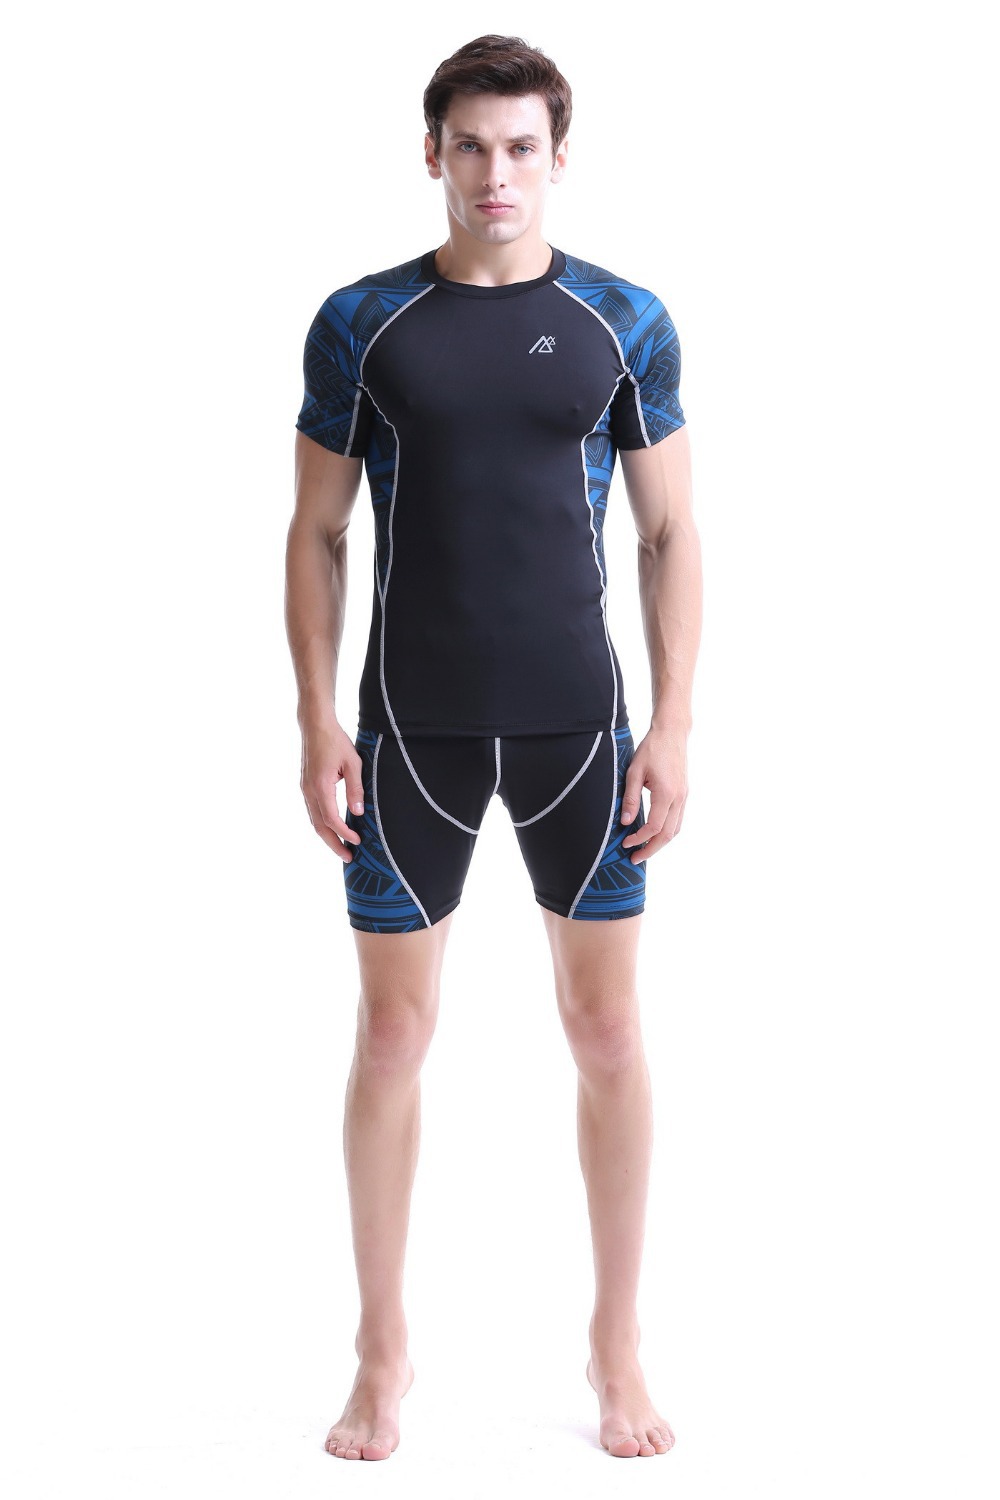 men's run set suit for jogging training gym T shirt Polyester Spandex dry fit Soft feeling gym custom tshirt